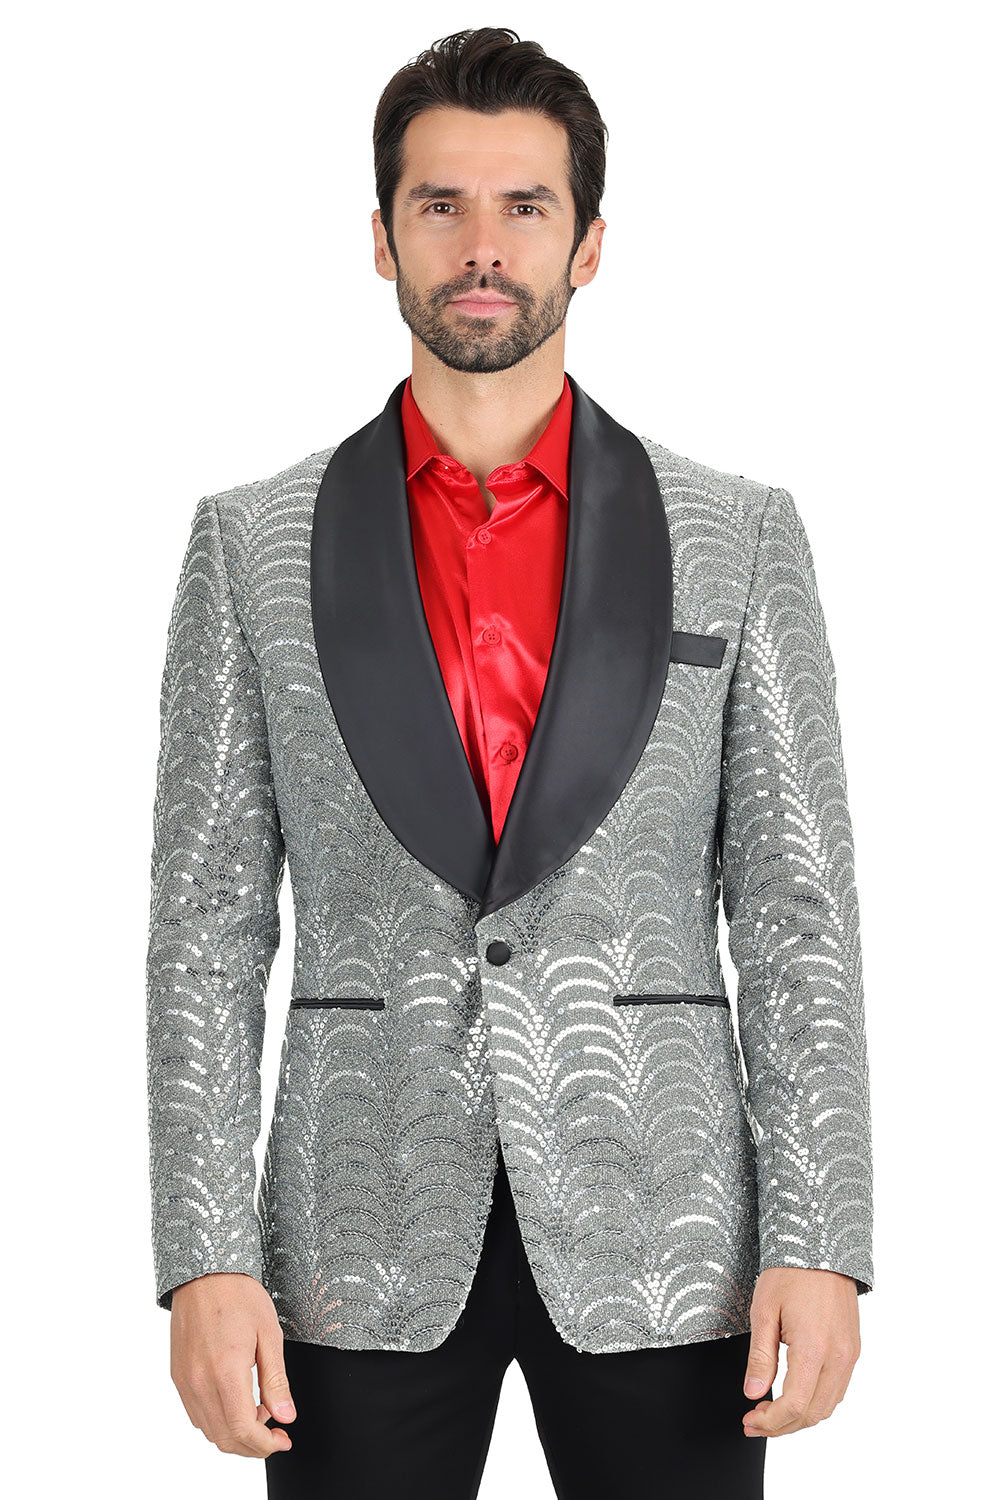 BARABAS Men's High Fashion Sequin Shawl Satin Lapel Blazer 2BLR8 Black Silver